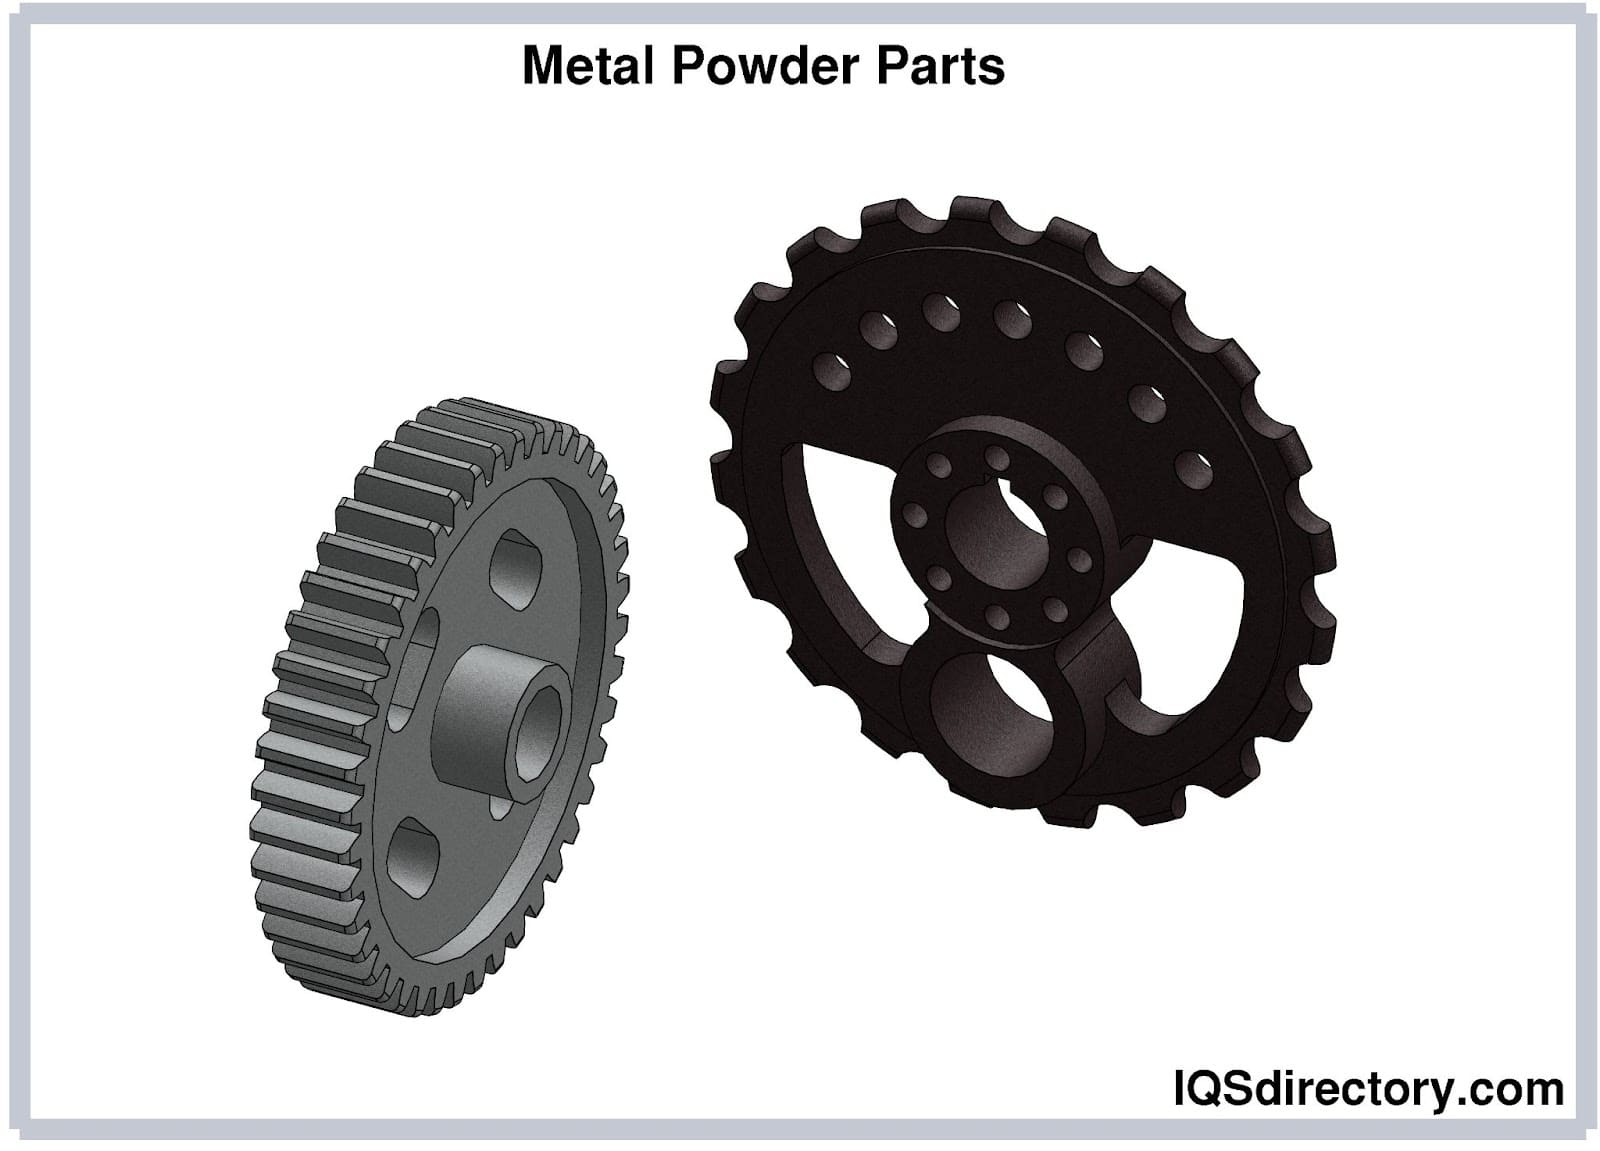 Metal-powder-parts